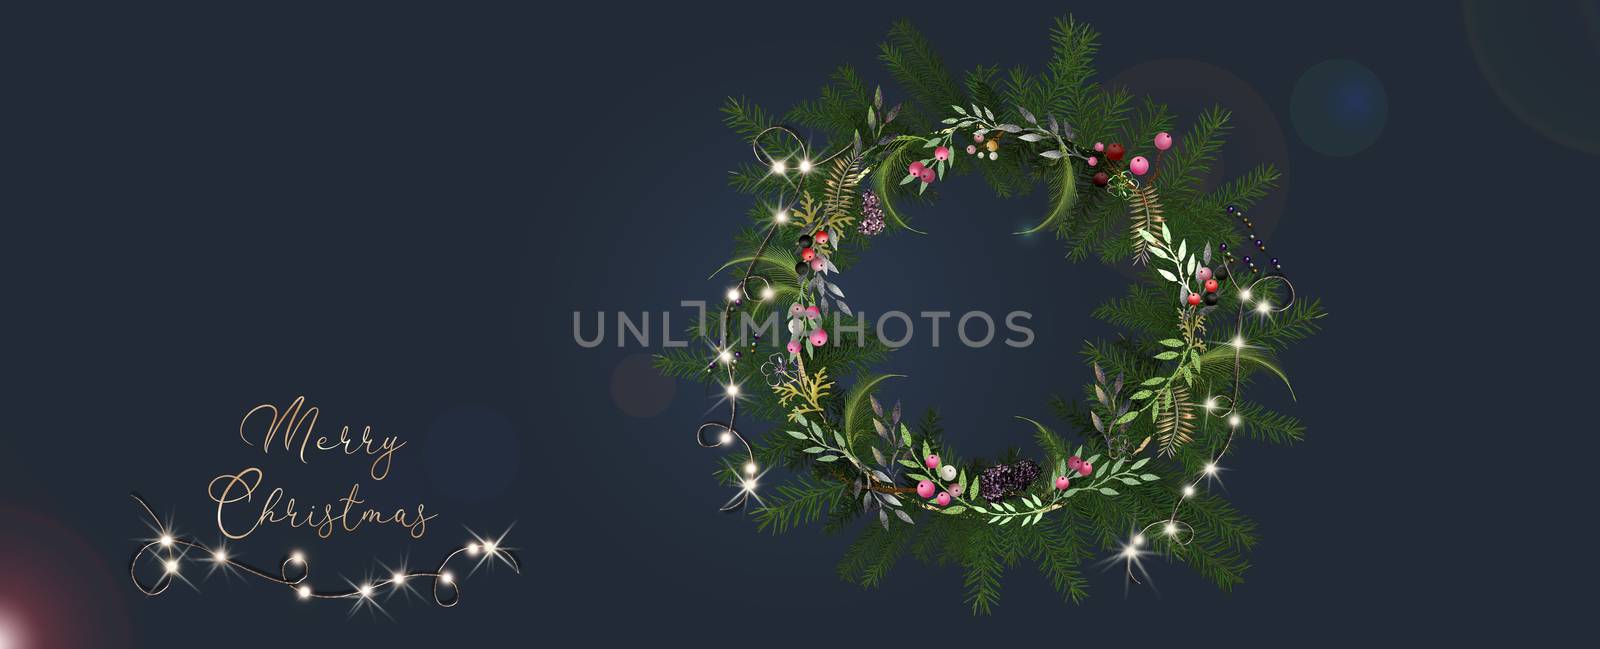 Christmas card design by NelliPolk